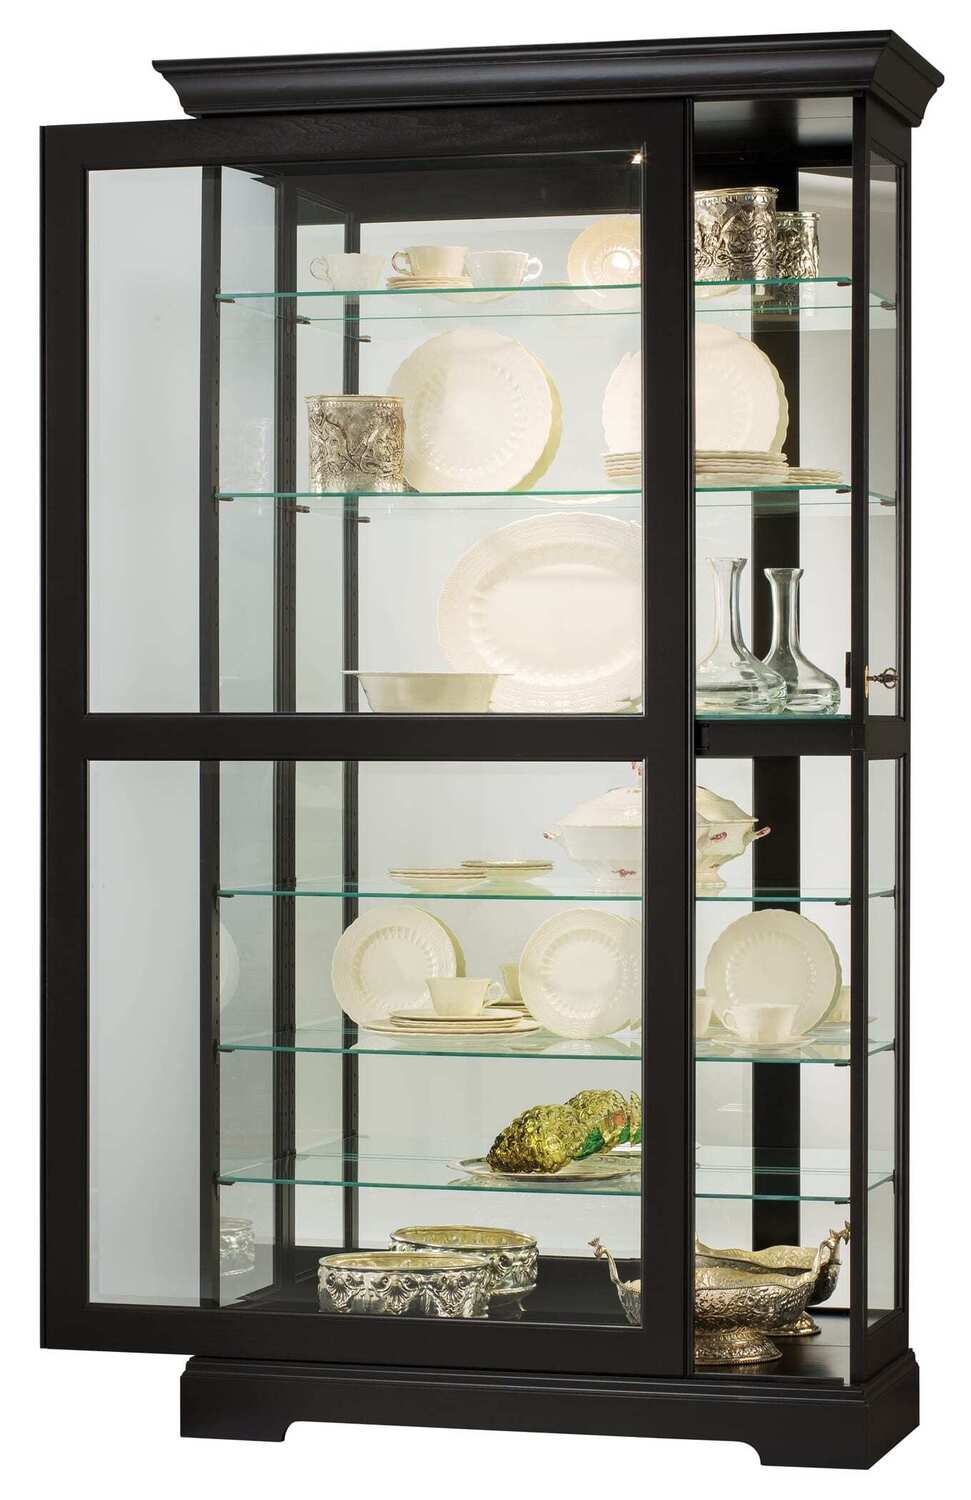 Howard Miller Tyler II Curio Cabinet 680-538 - Black Satin Finish Home Decor, Six Glass Shelves, Seven Level Display Case, Locking Slide Door, No-Reach Light